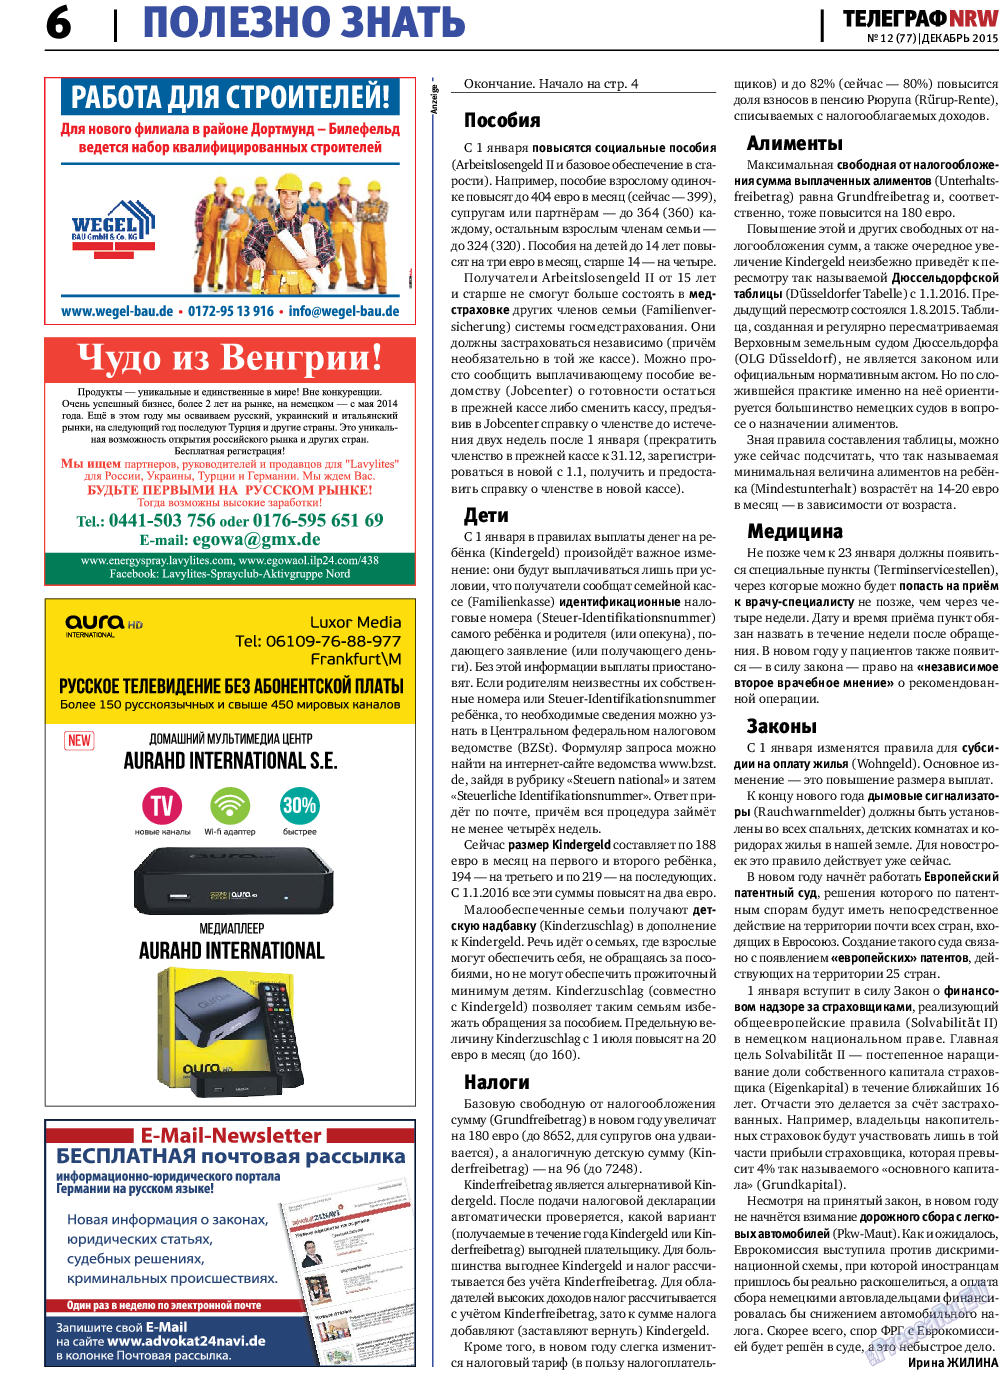 Телеграф NRW, газета. 2015 №12 стр.6